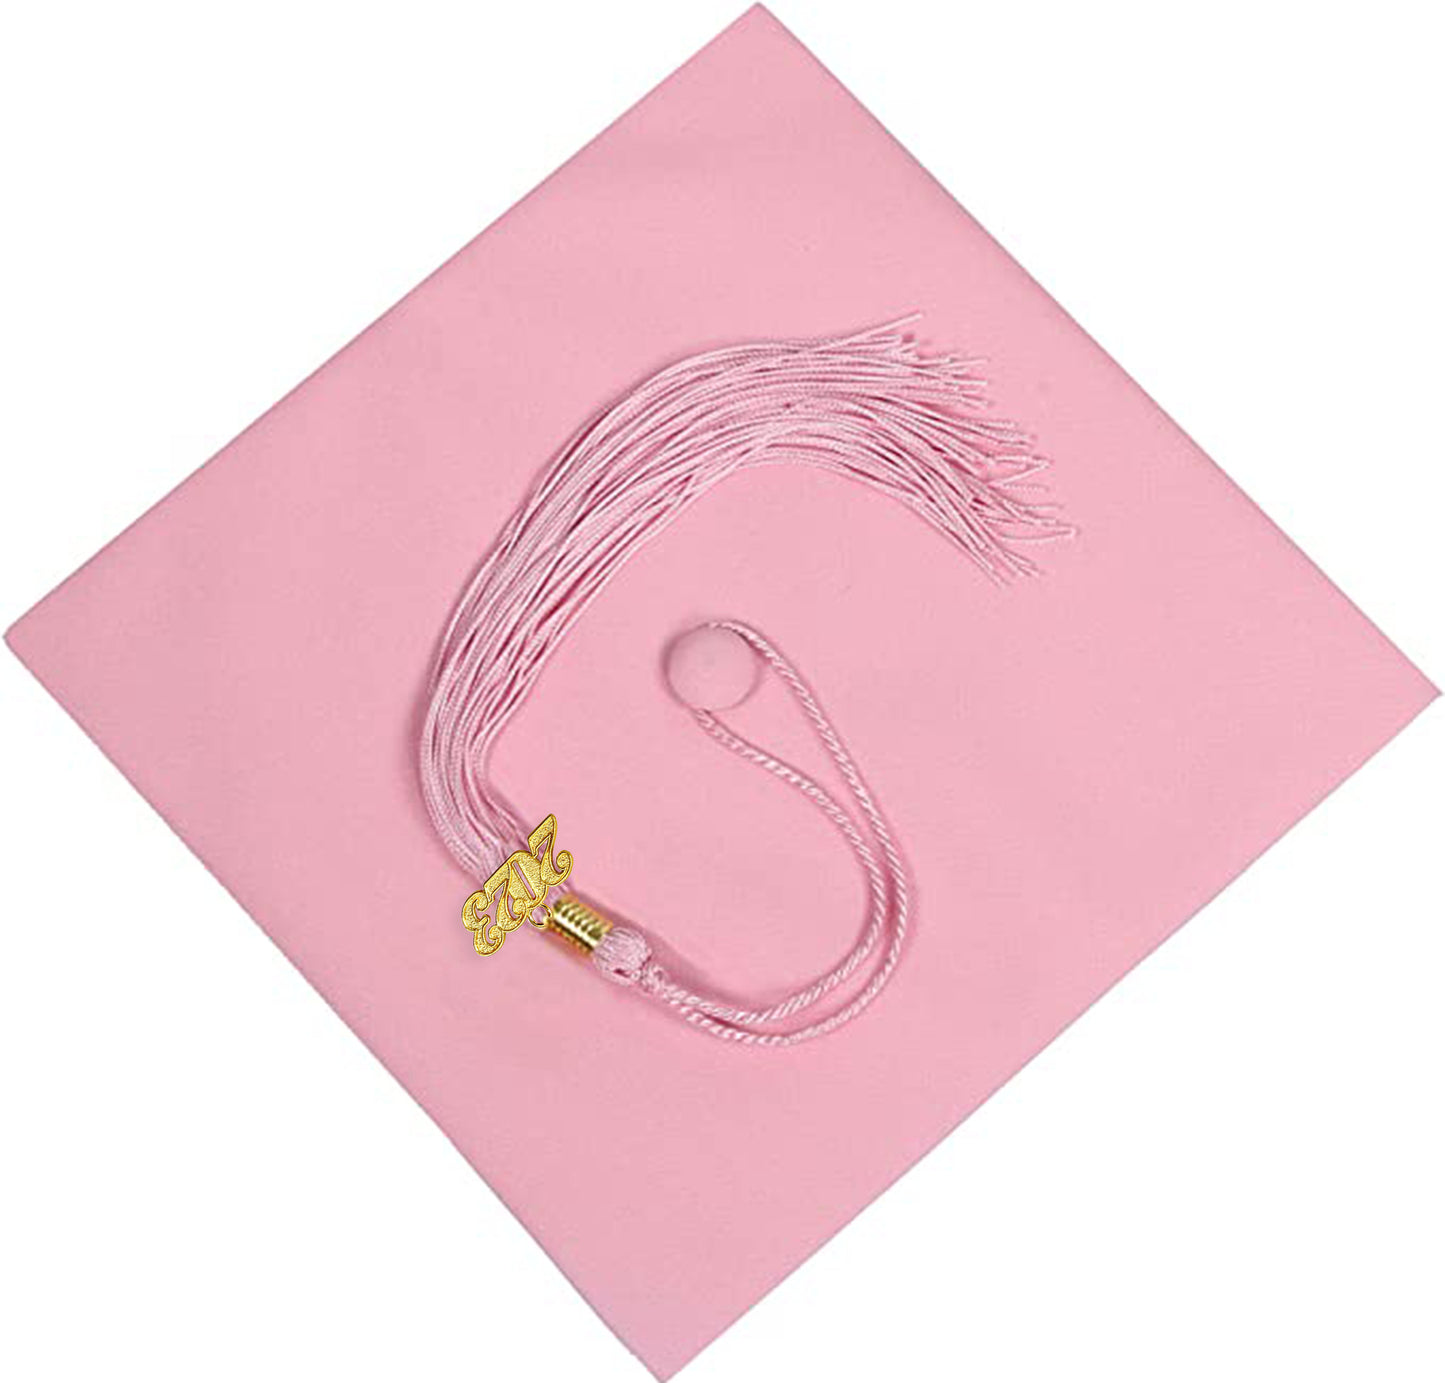 Matte Pink Graduation Cap and Tassel